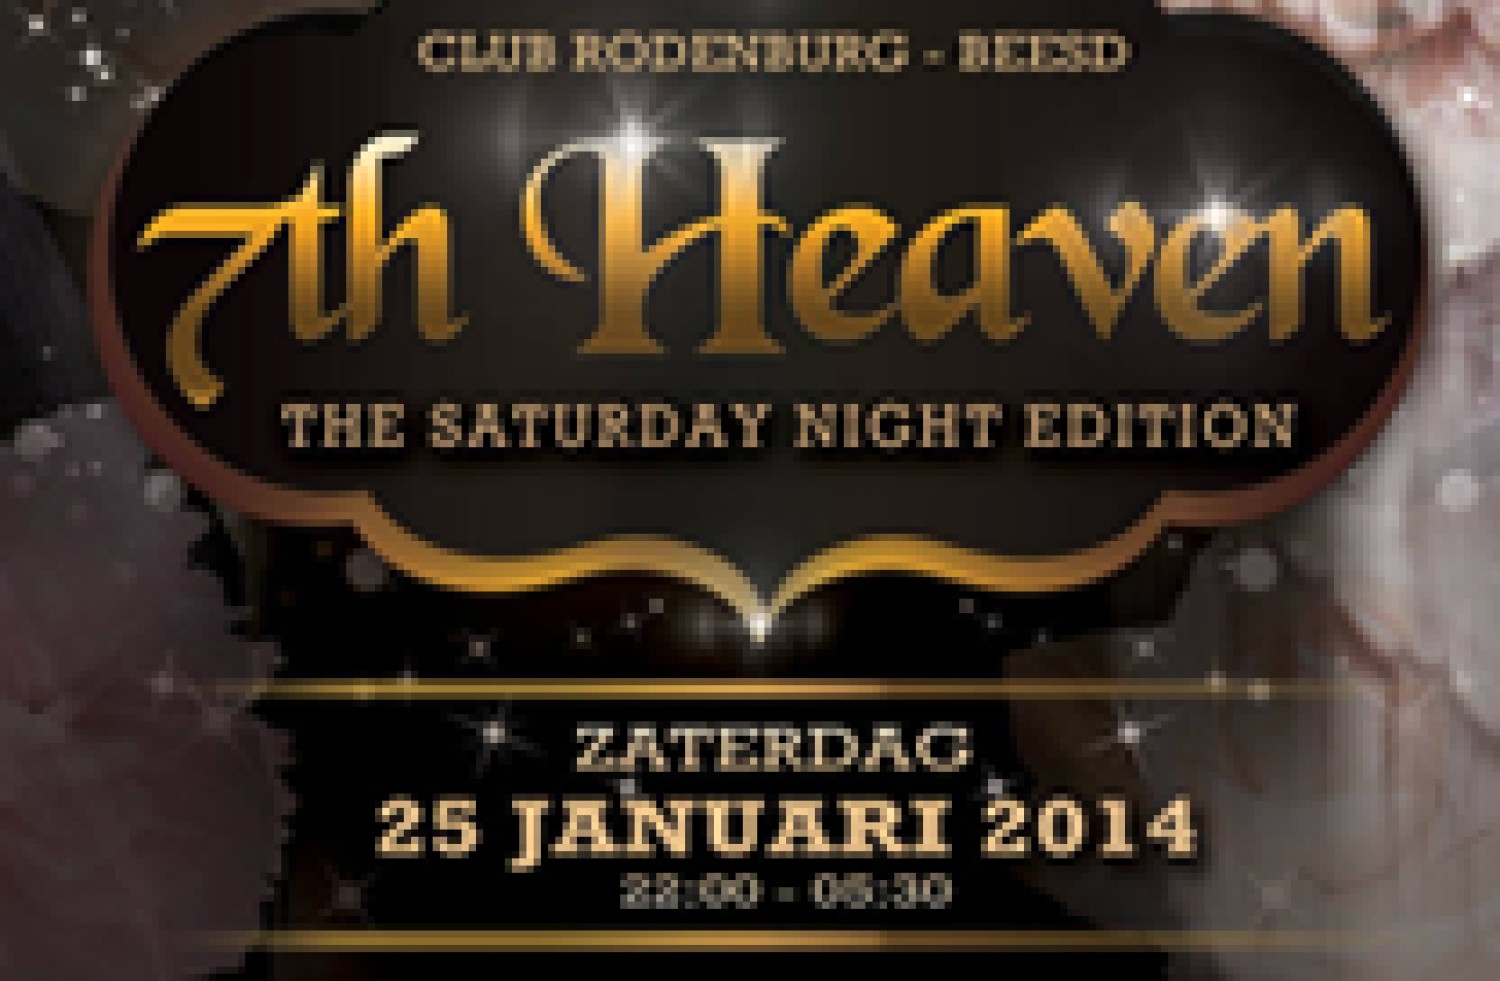 Party nieuws: 7th Heaven in Club Rodenburg op zaterdag 25 januari